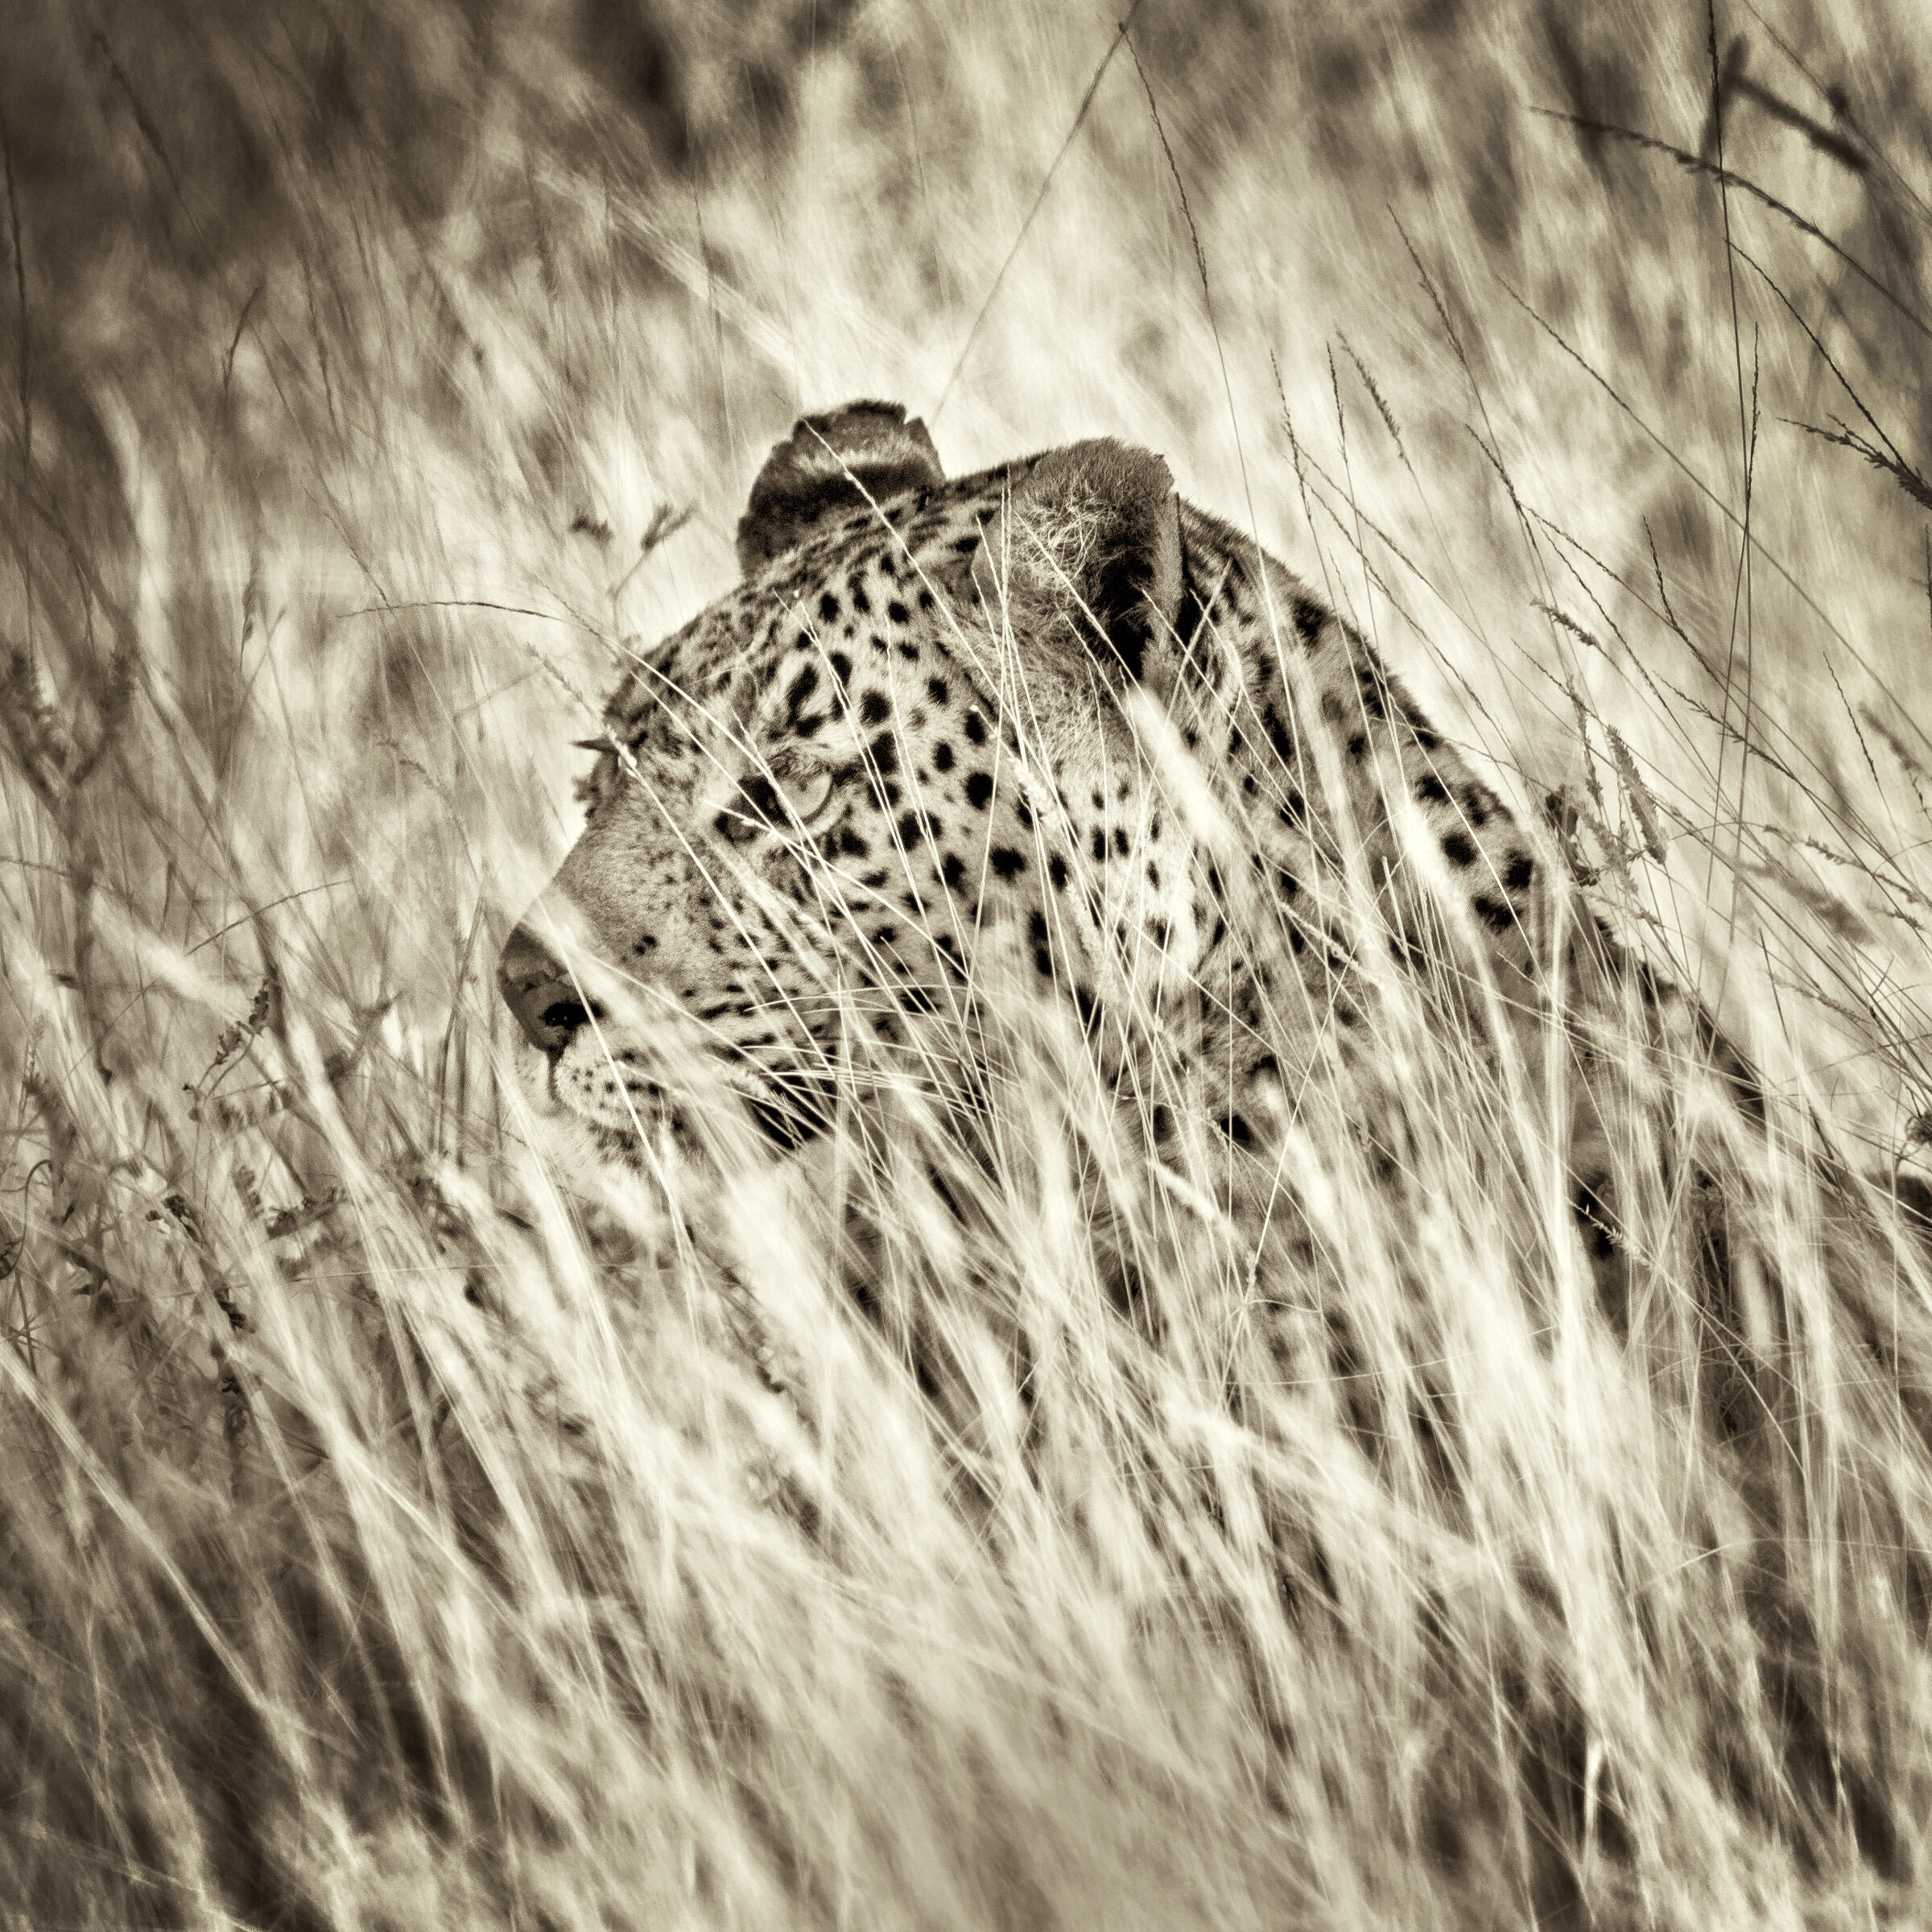 Leopard...